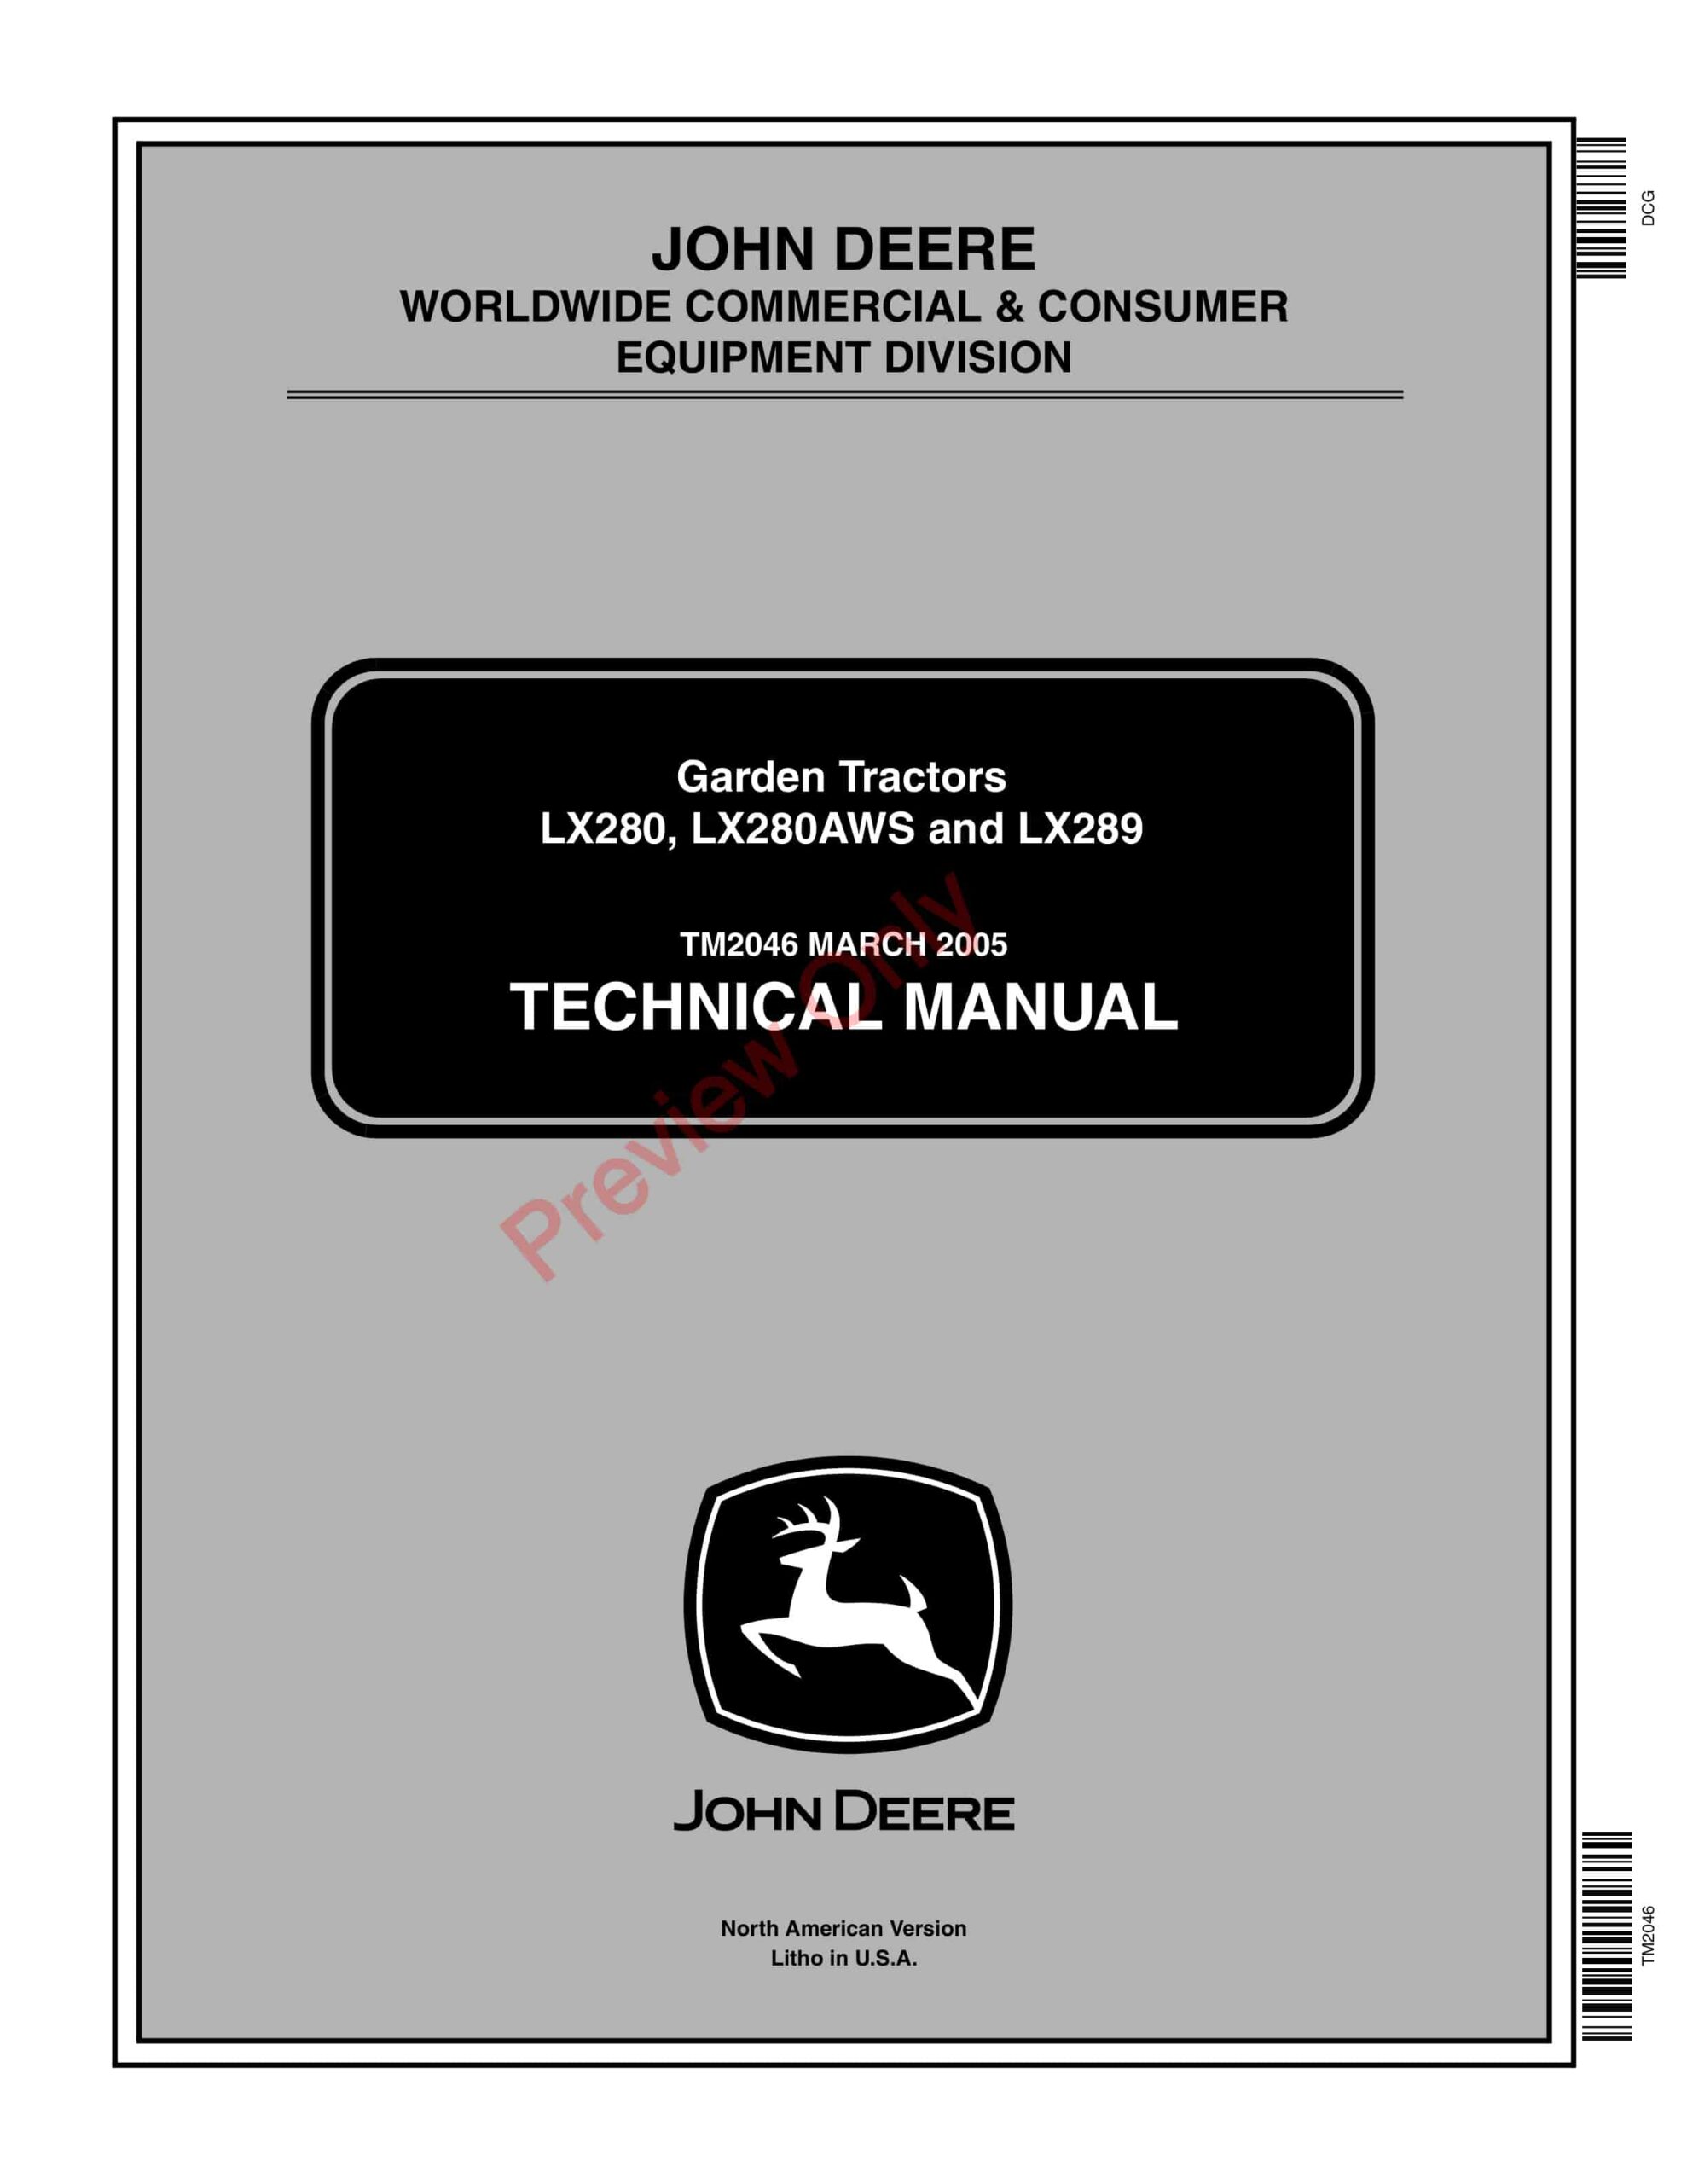 John Deere LX280, LX280AWS, LX289 (with decks) Technical Manual TM2046 01MAR05-1